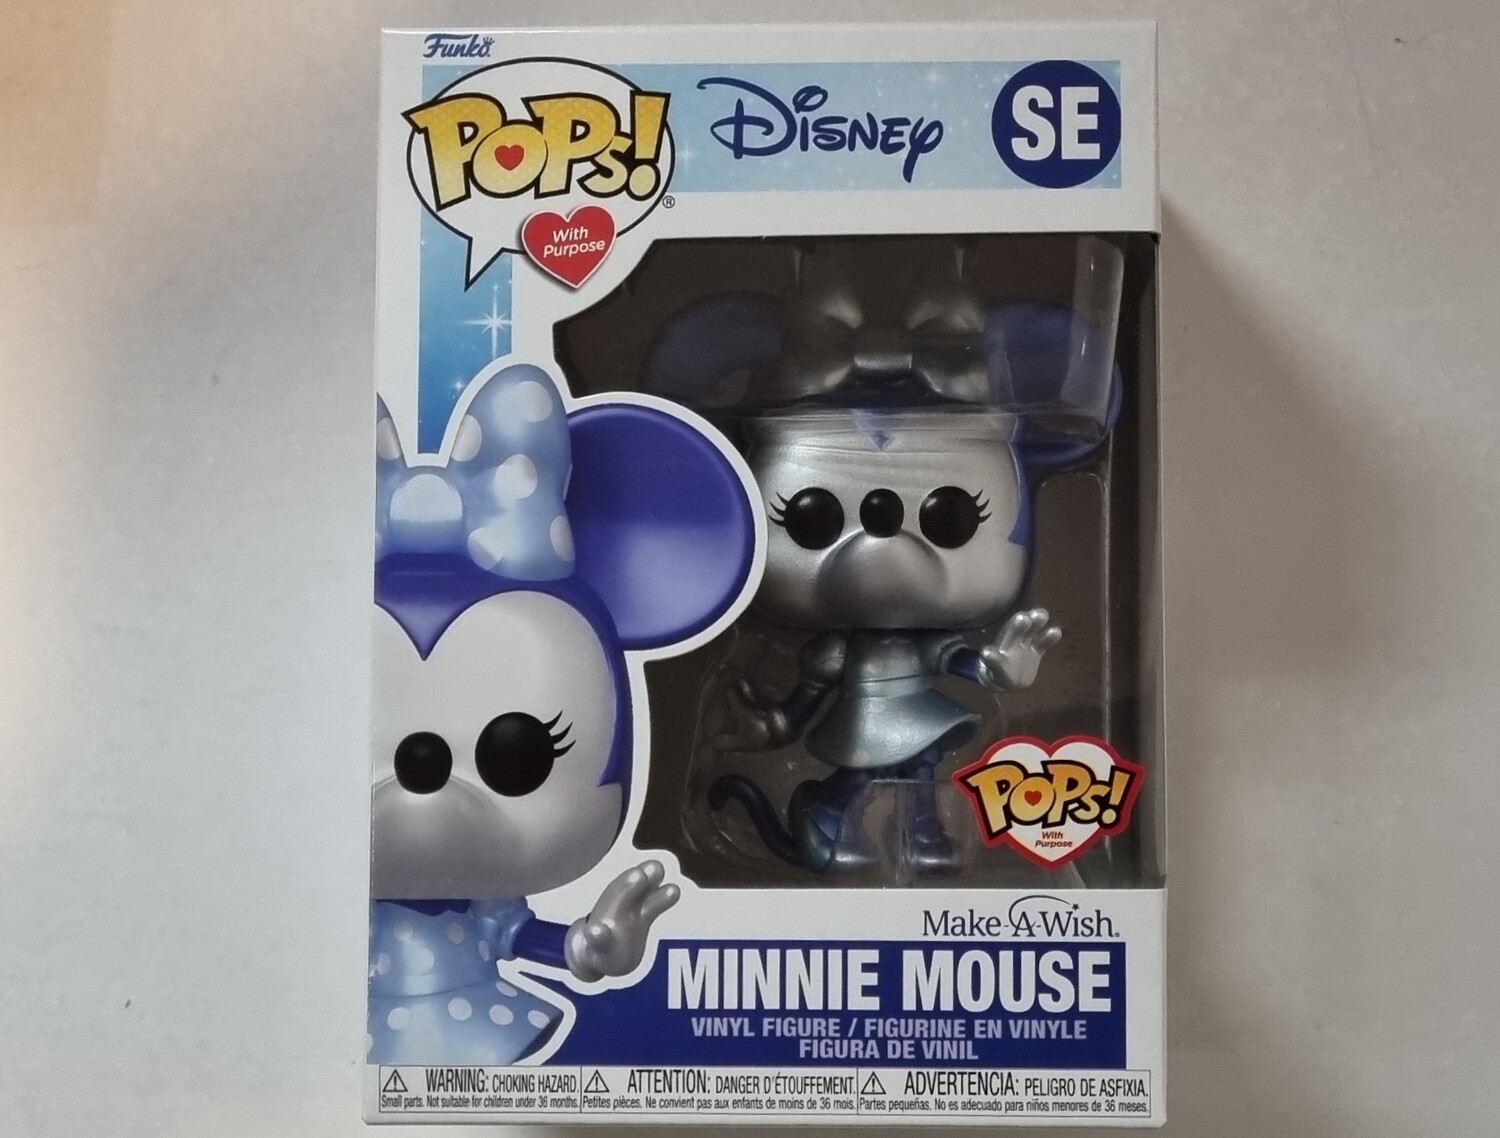 Funko Pop!, Minnie Mouse, #SE, Make a Wish, Pops With Purpose